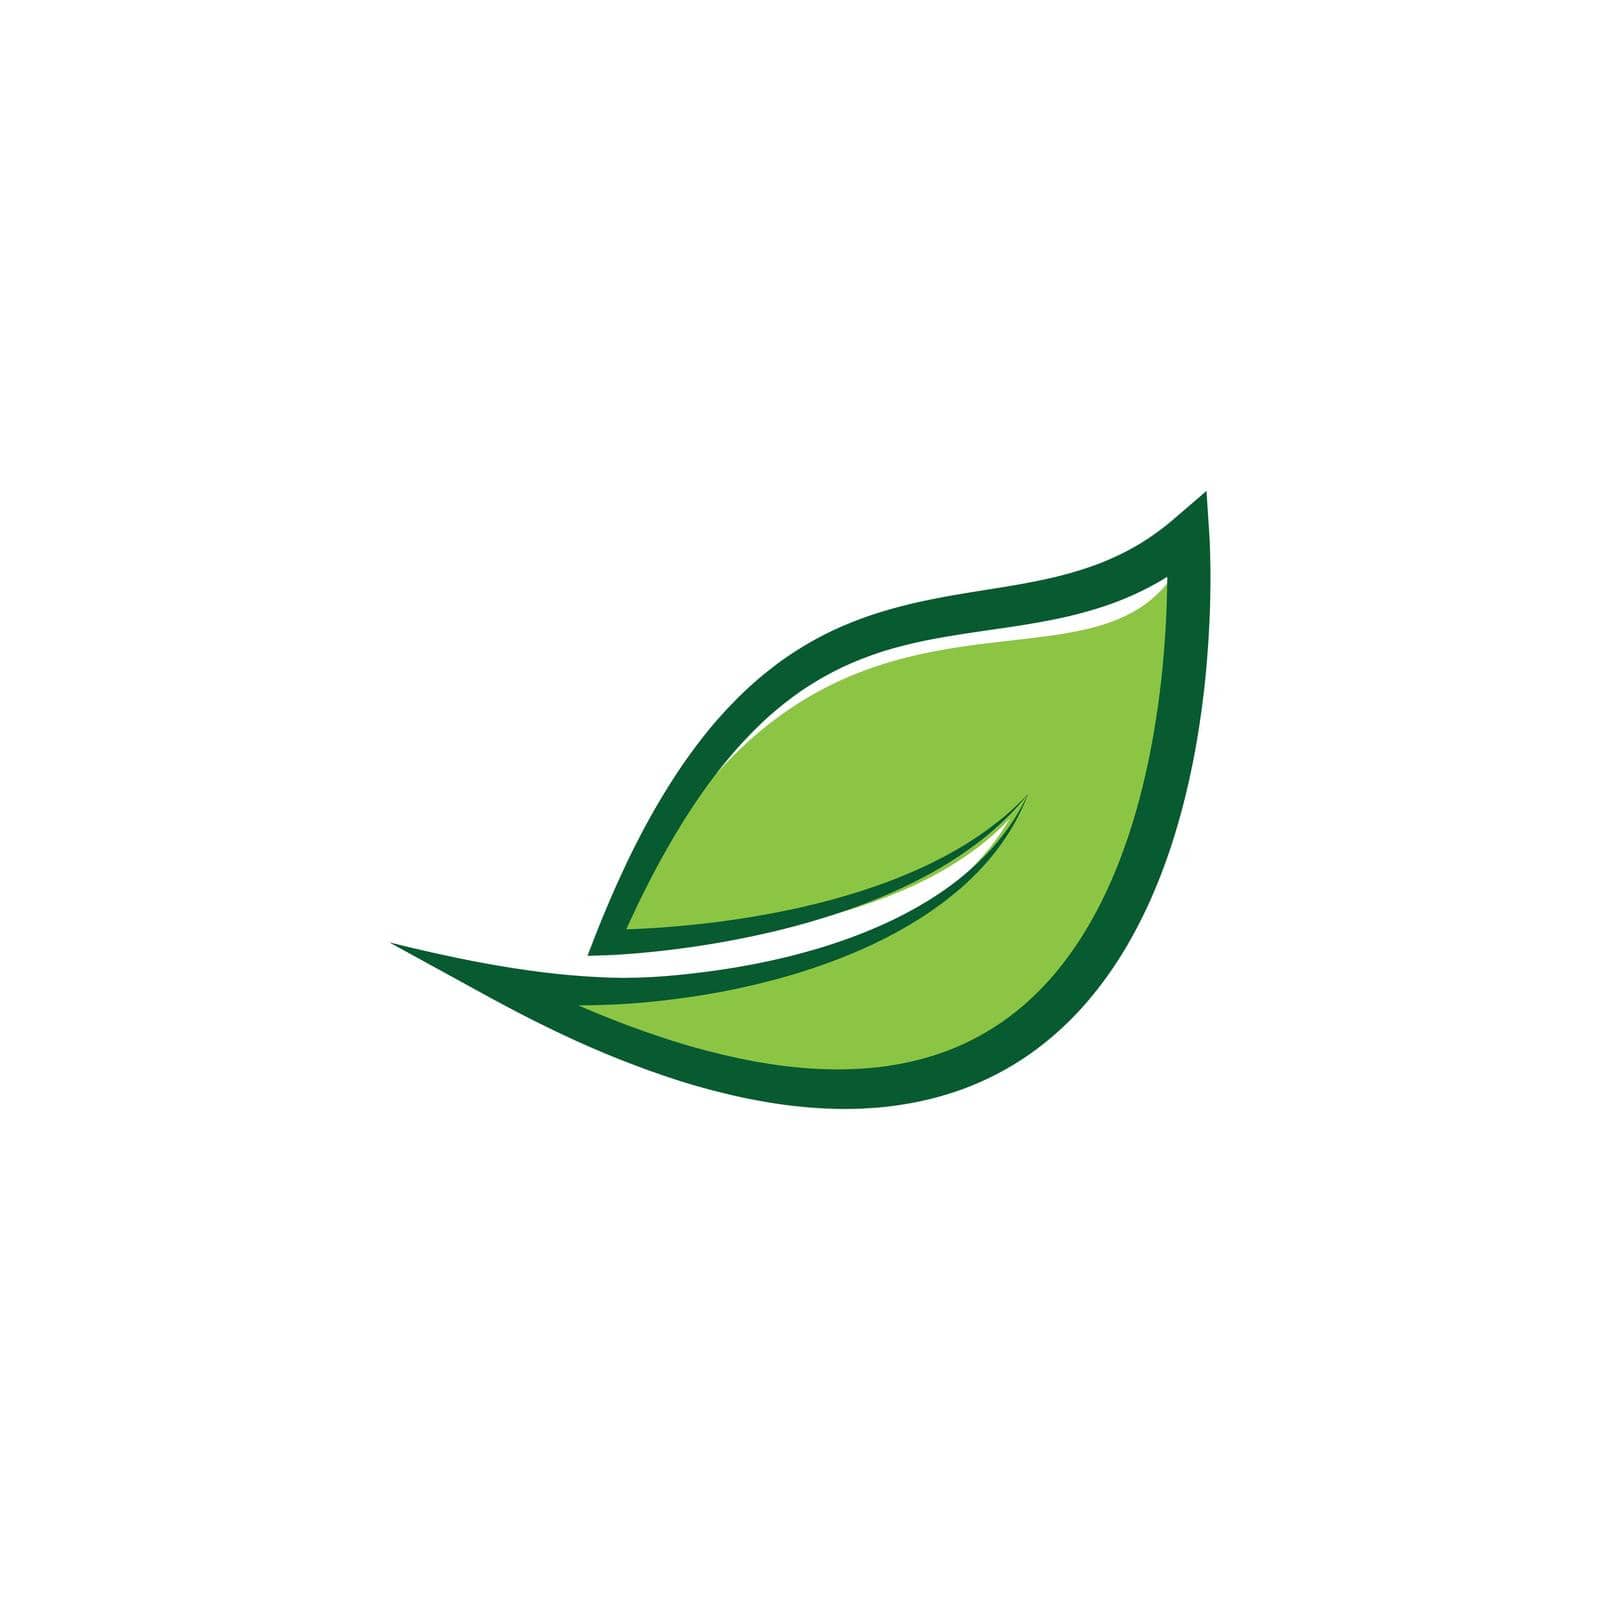 Leaf symbol vector icon and symbol illustration